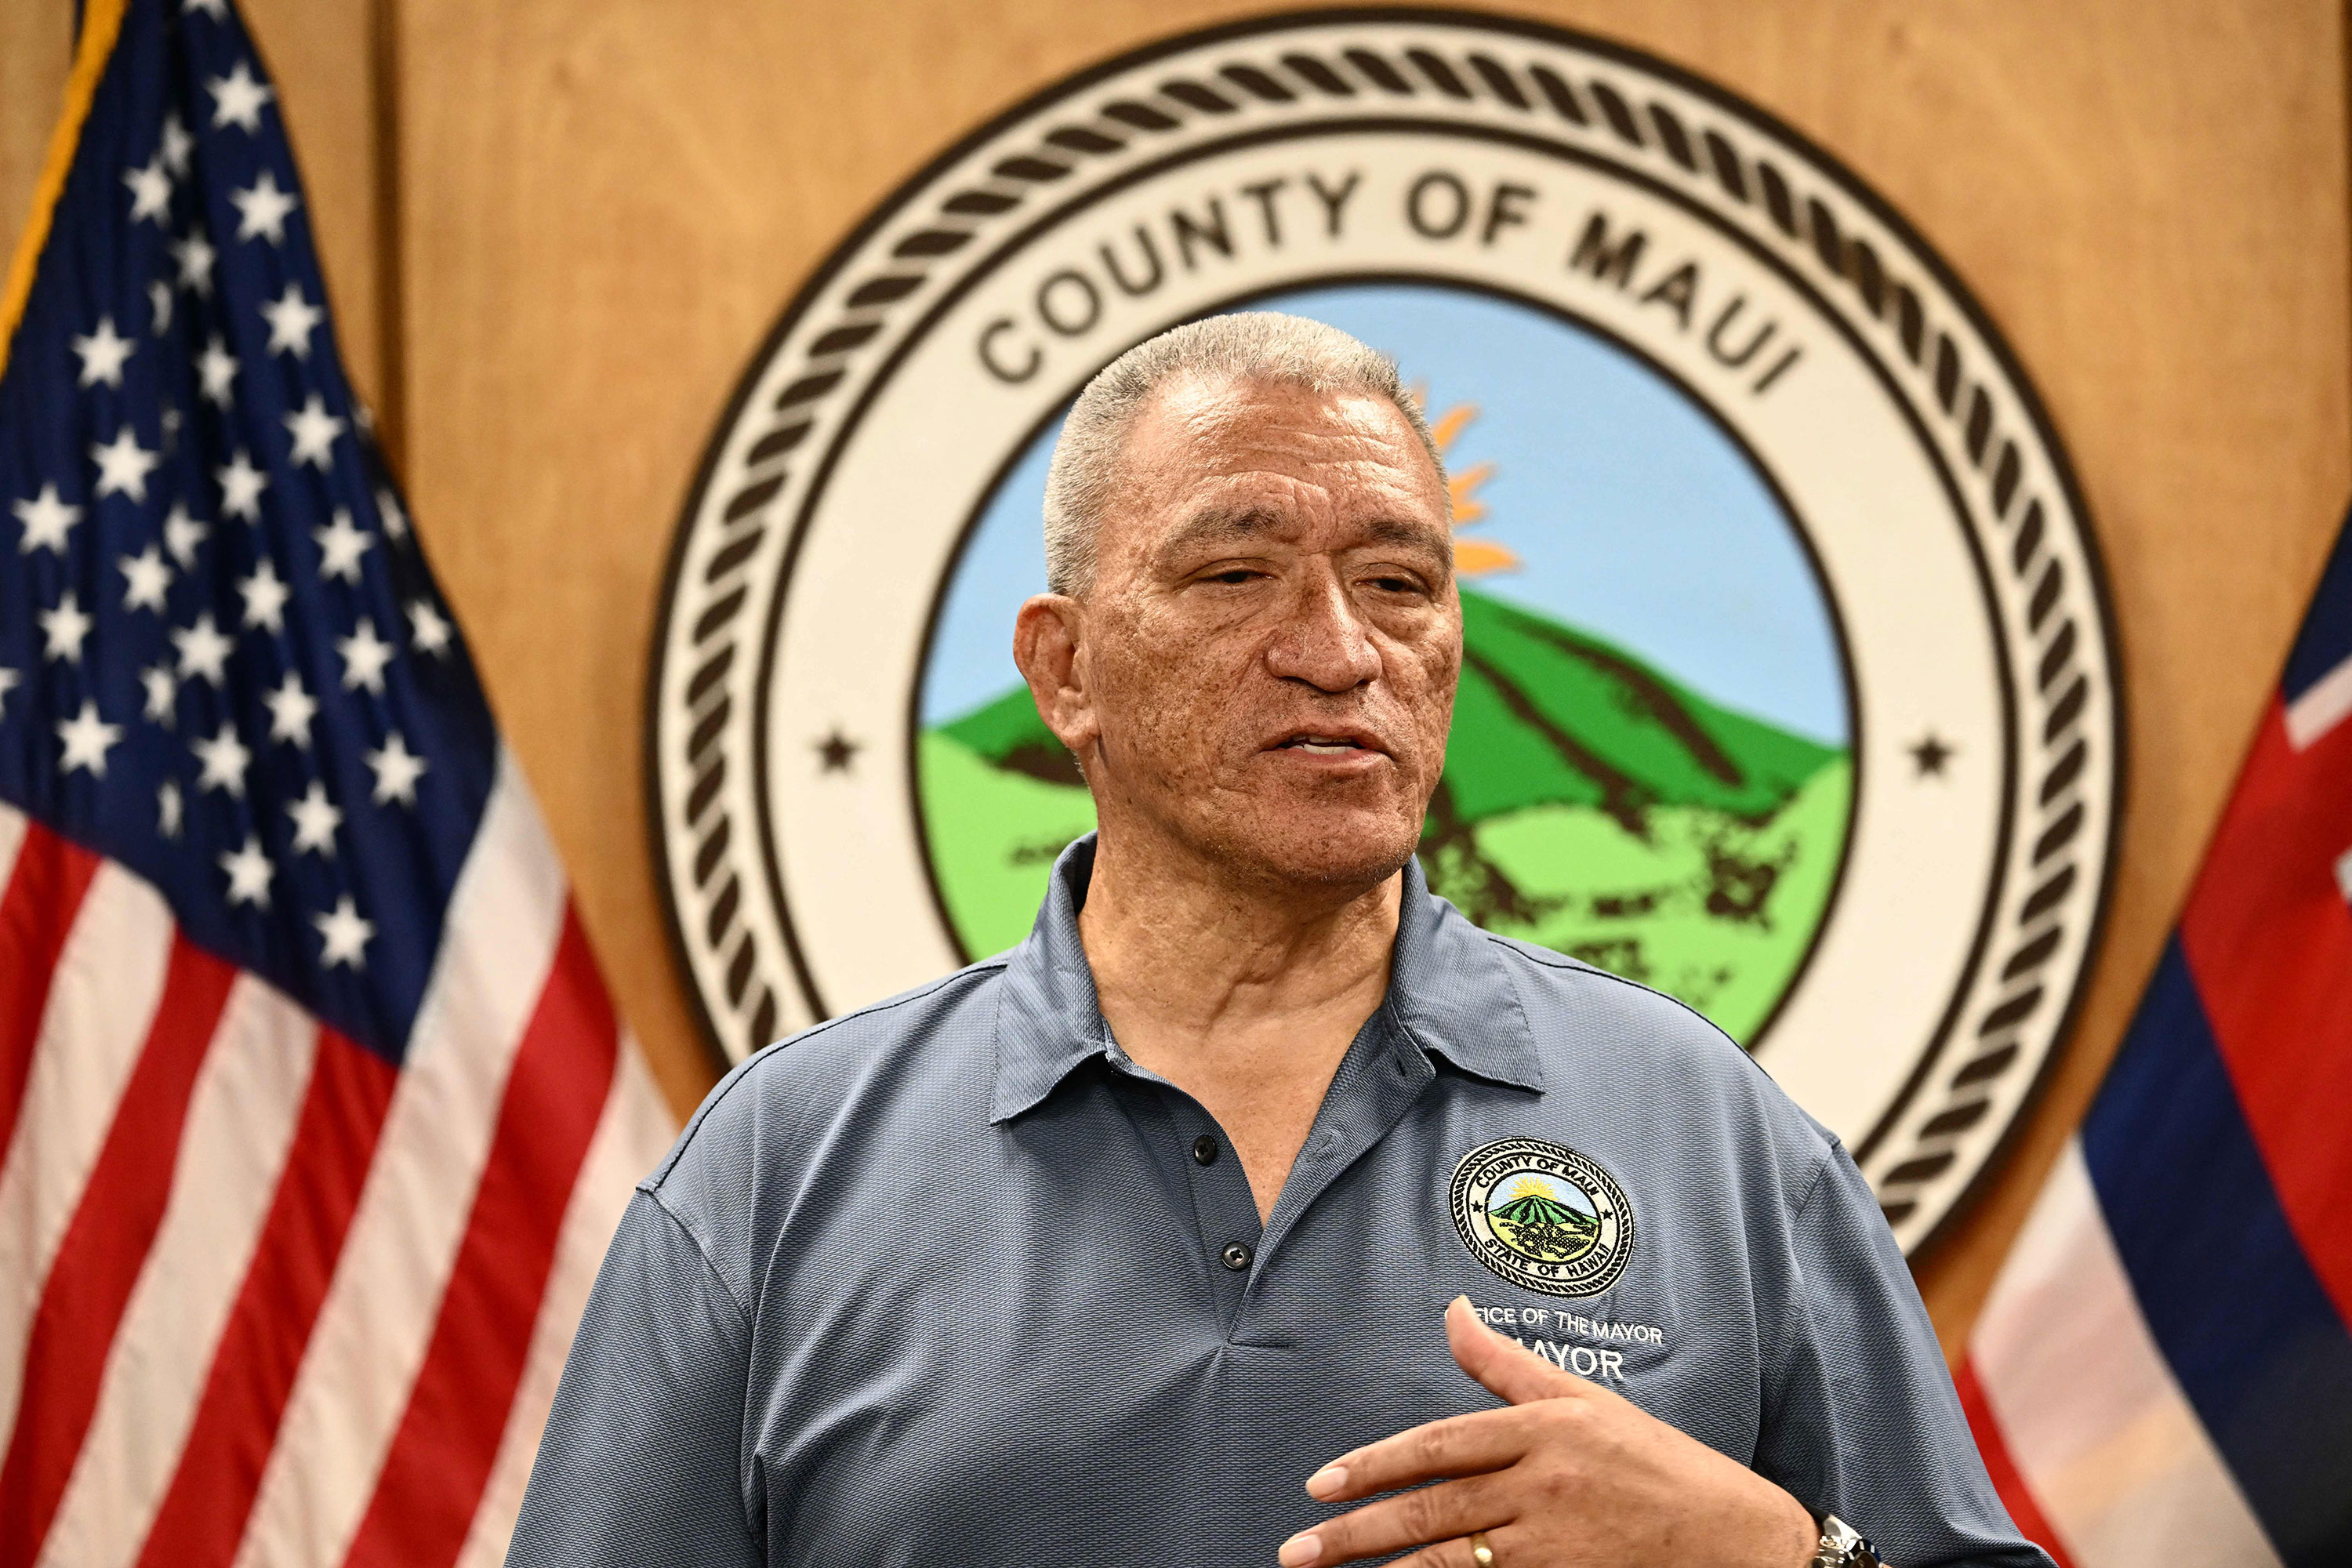 Maui County Mayor Richard T. Bissen, Jr. speaks during a press conference in Wailuku, Hawaii, on Thursday.